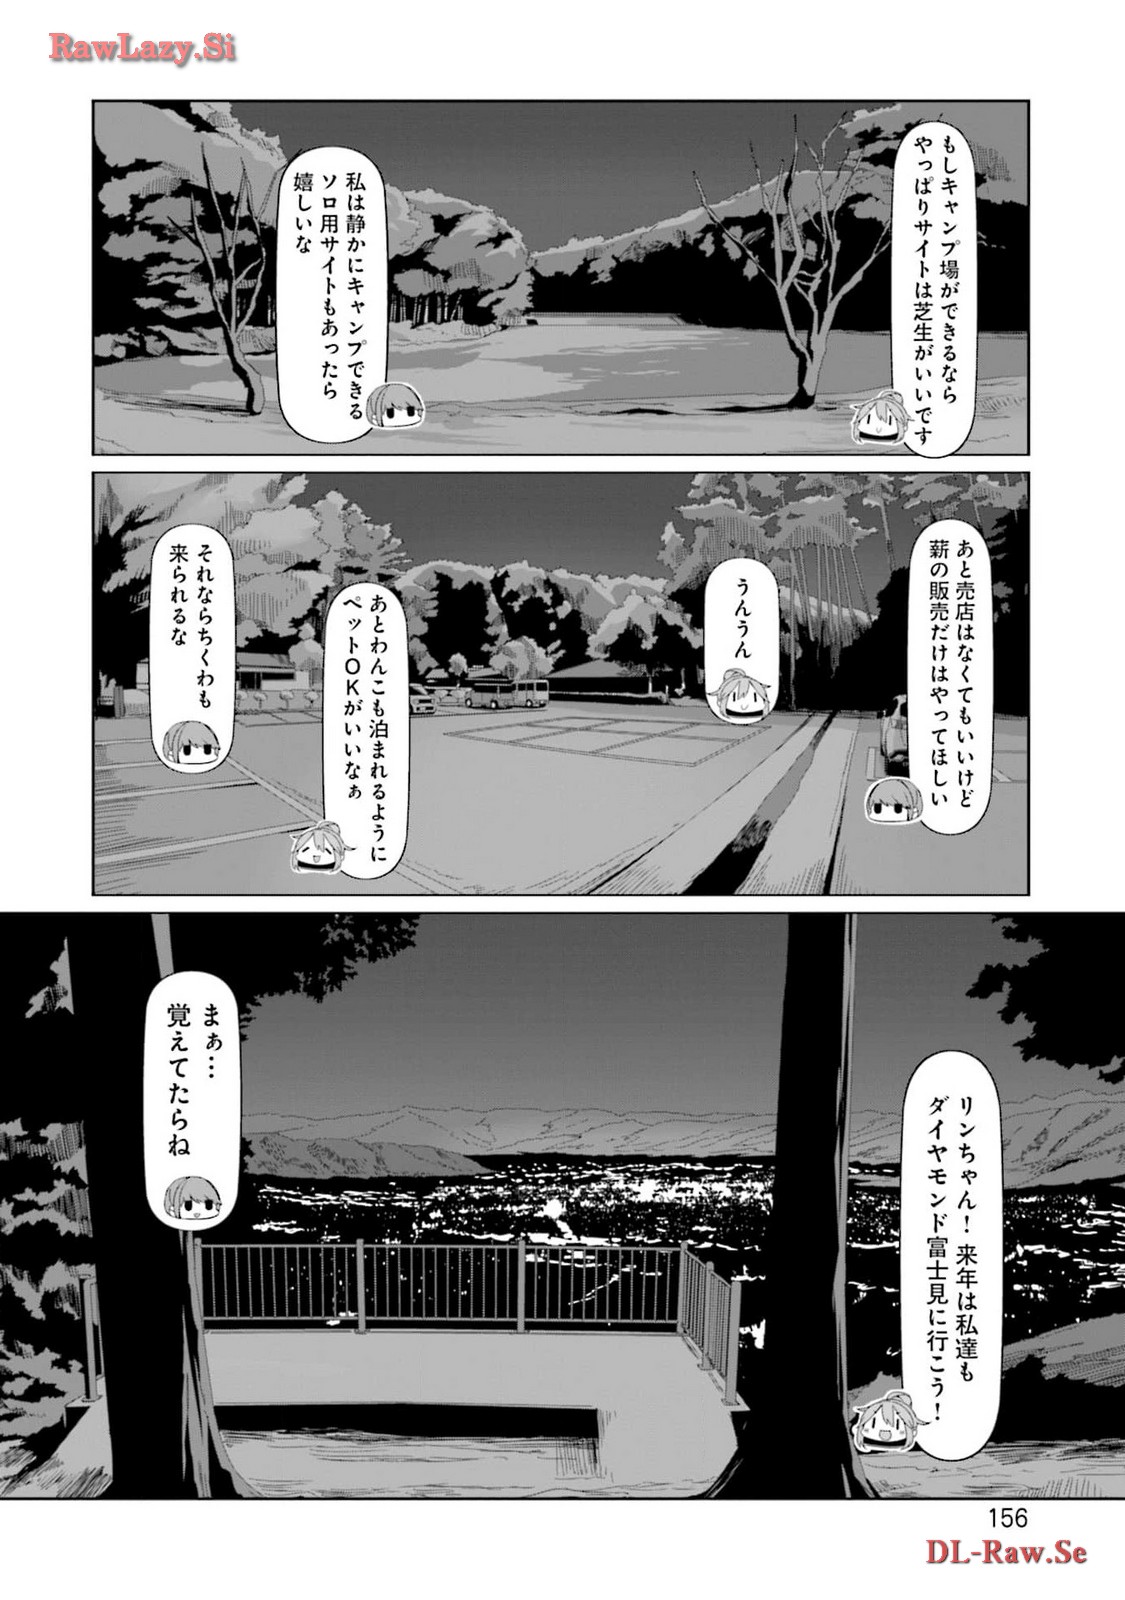 Yuru Camp - Chapter 92.2 - Page 24